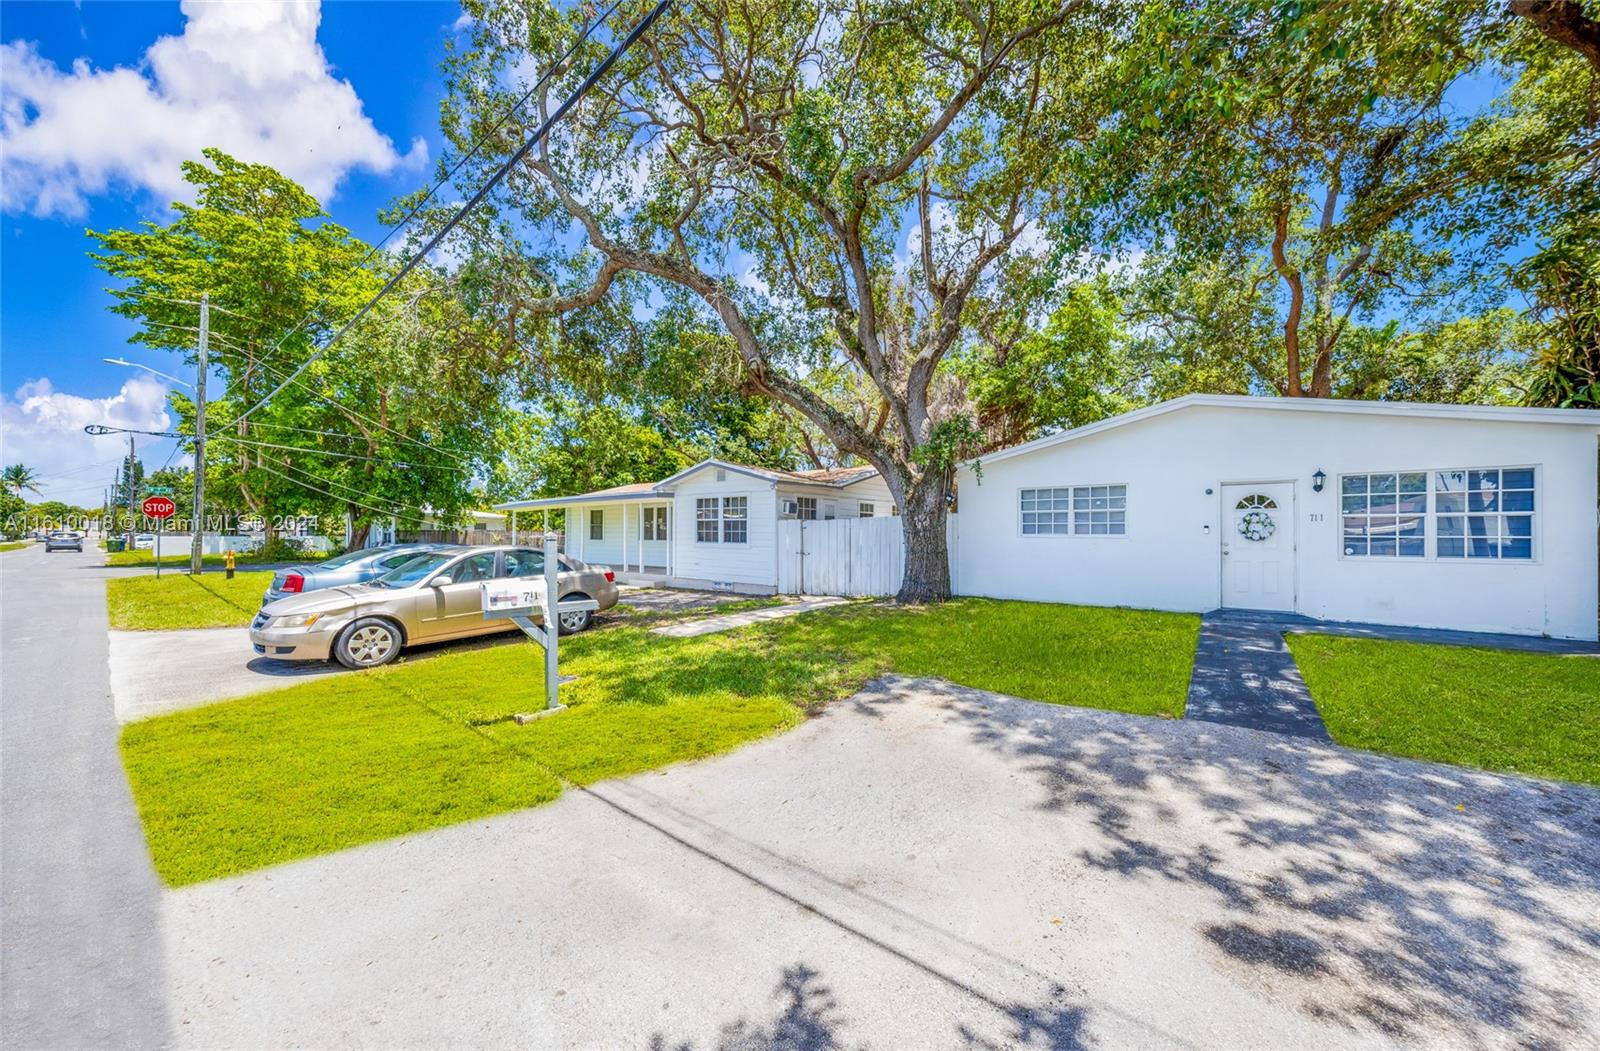 Rental Property at 701 Sw 6th St St, Hallandale Beach, Broward County, Florida -  - $1,800,000 MO.